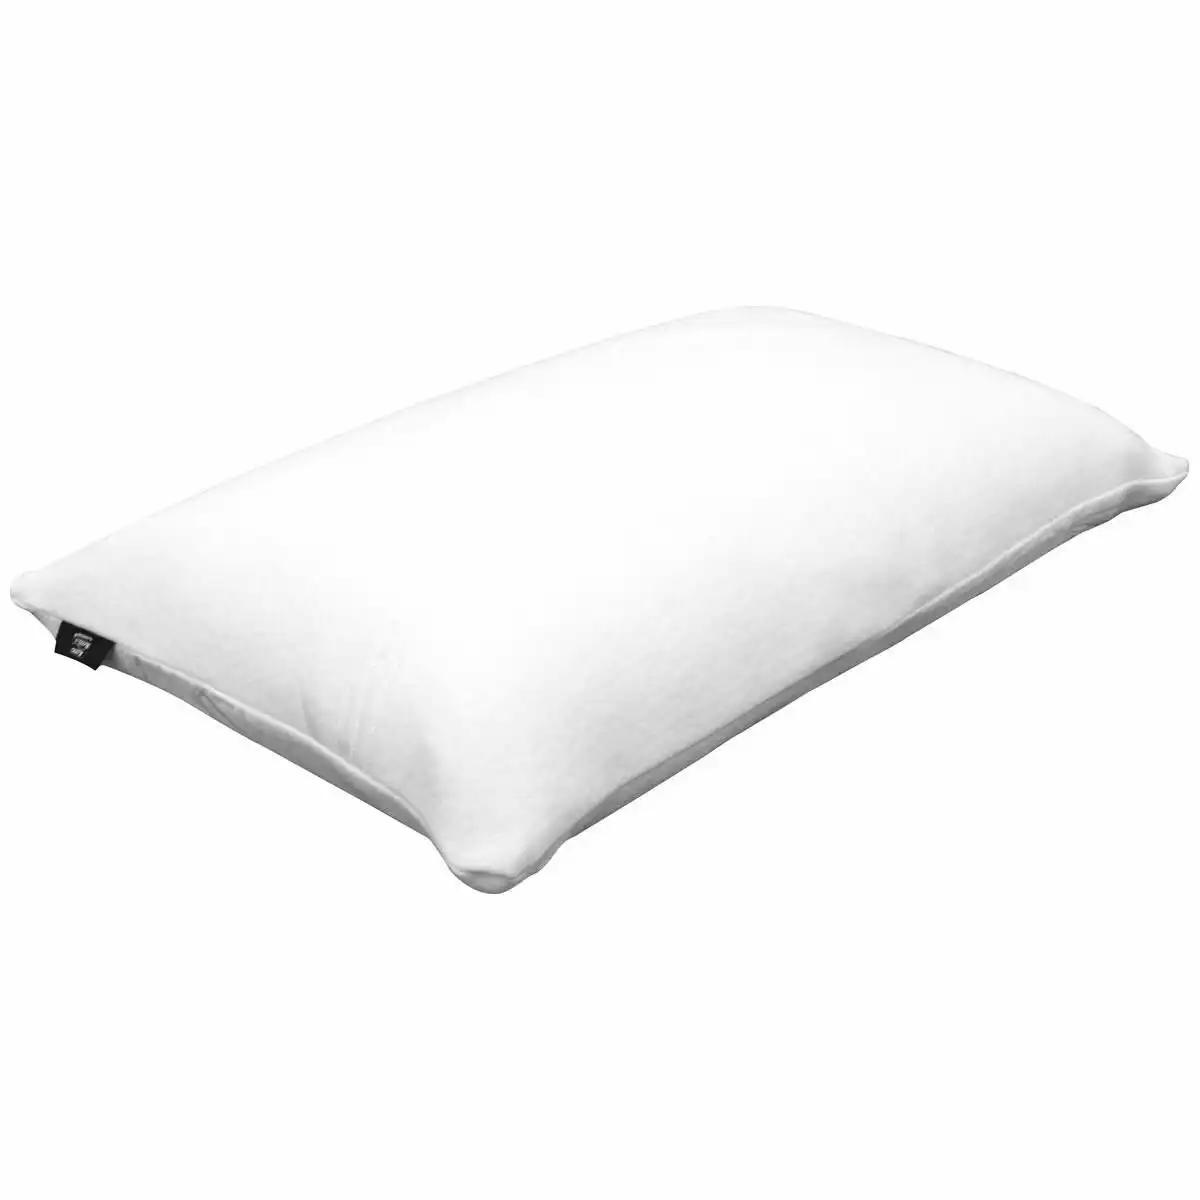 A.H. Beard King Koil Memory Foam Classic Pillow